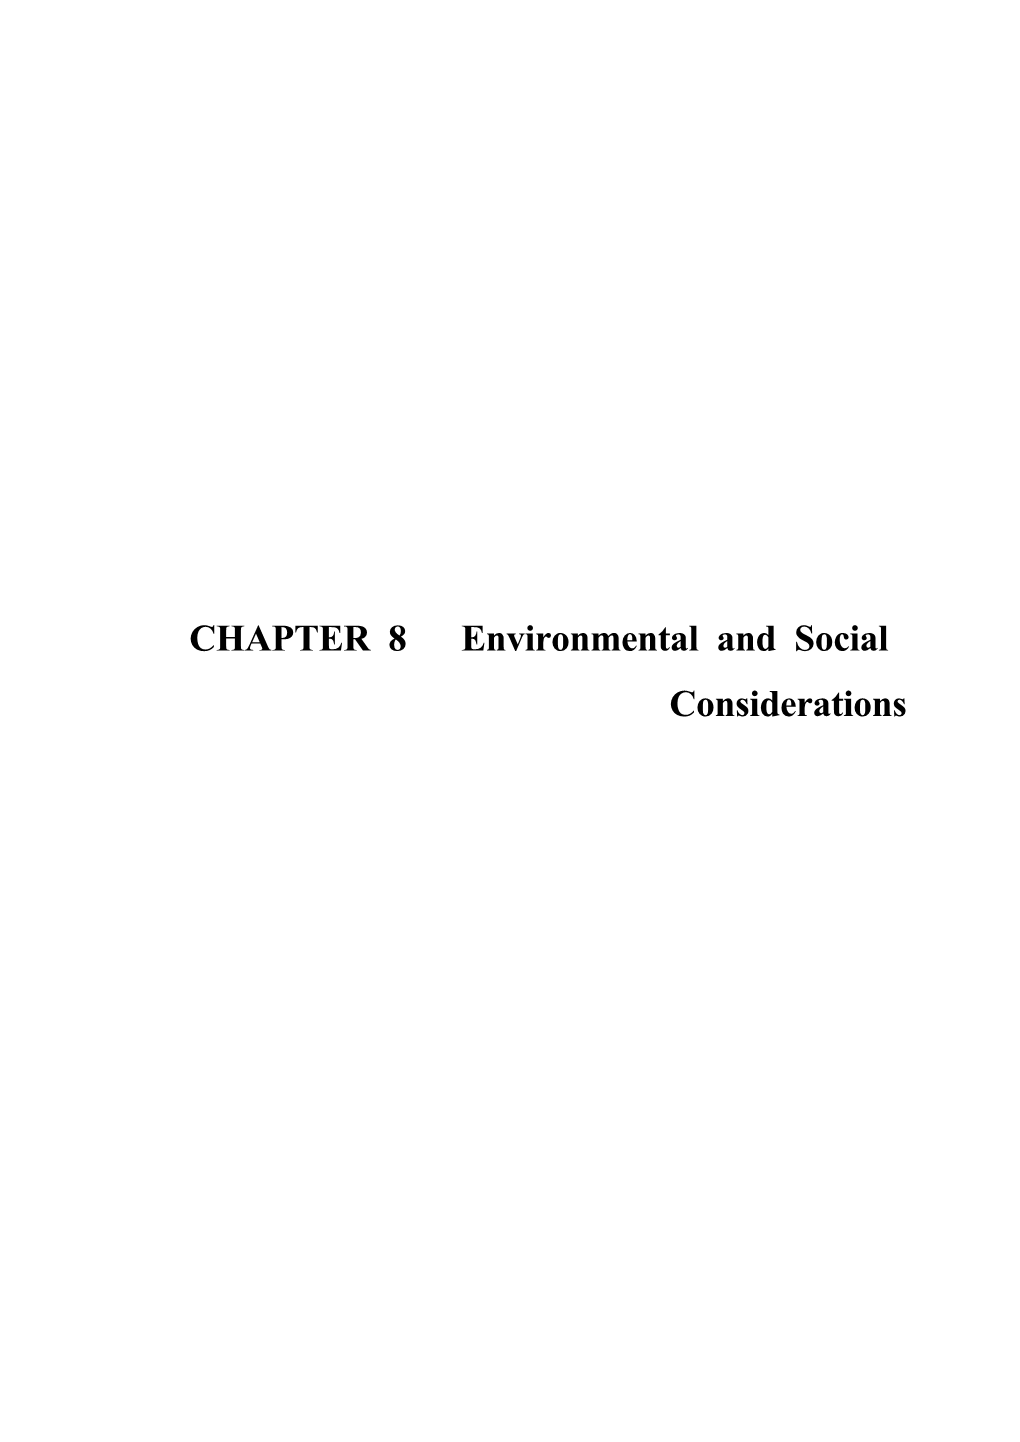 CHAPTER 8 Environmental and Social Considerations Chapter 8 Environmental and Social Considerations